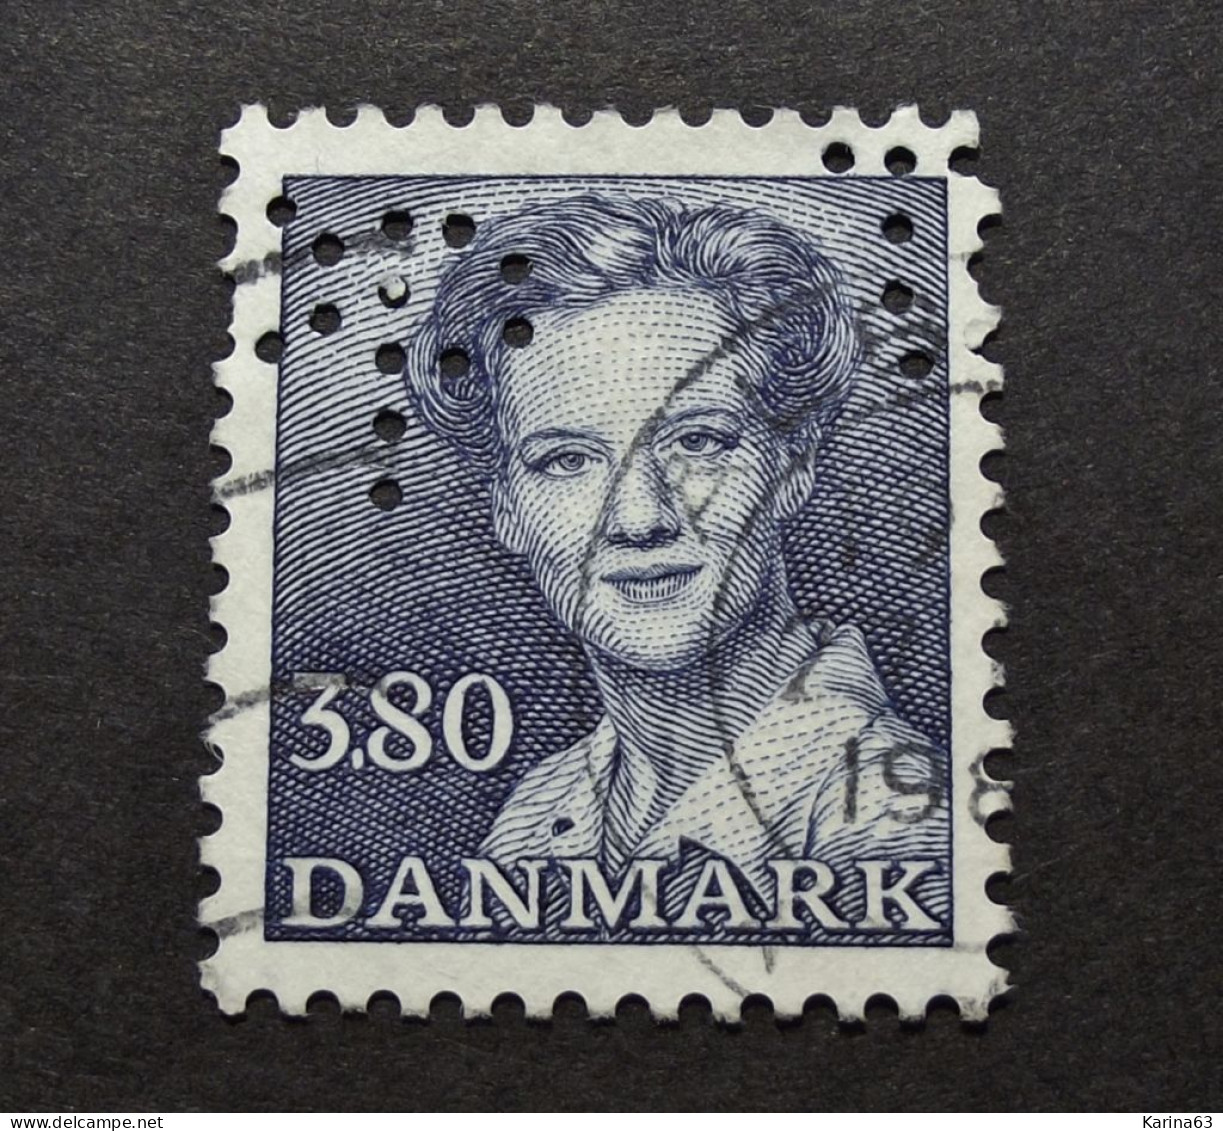 Denmark  - Danemark - 1975 - Queen Margrethe Perfin -  Topsikring Insurance Company From Copenhagen   - Cancelled - Oblitérés